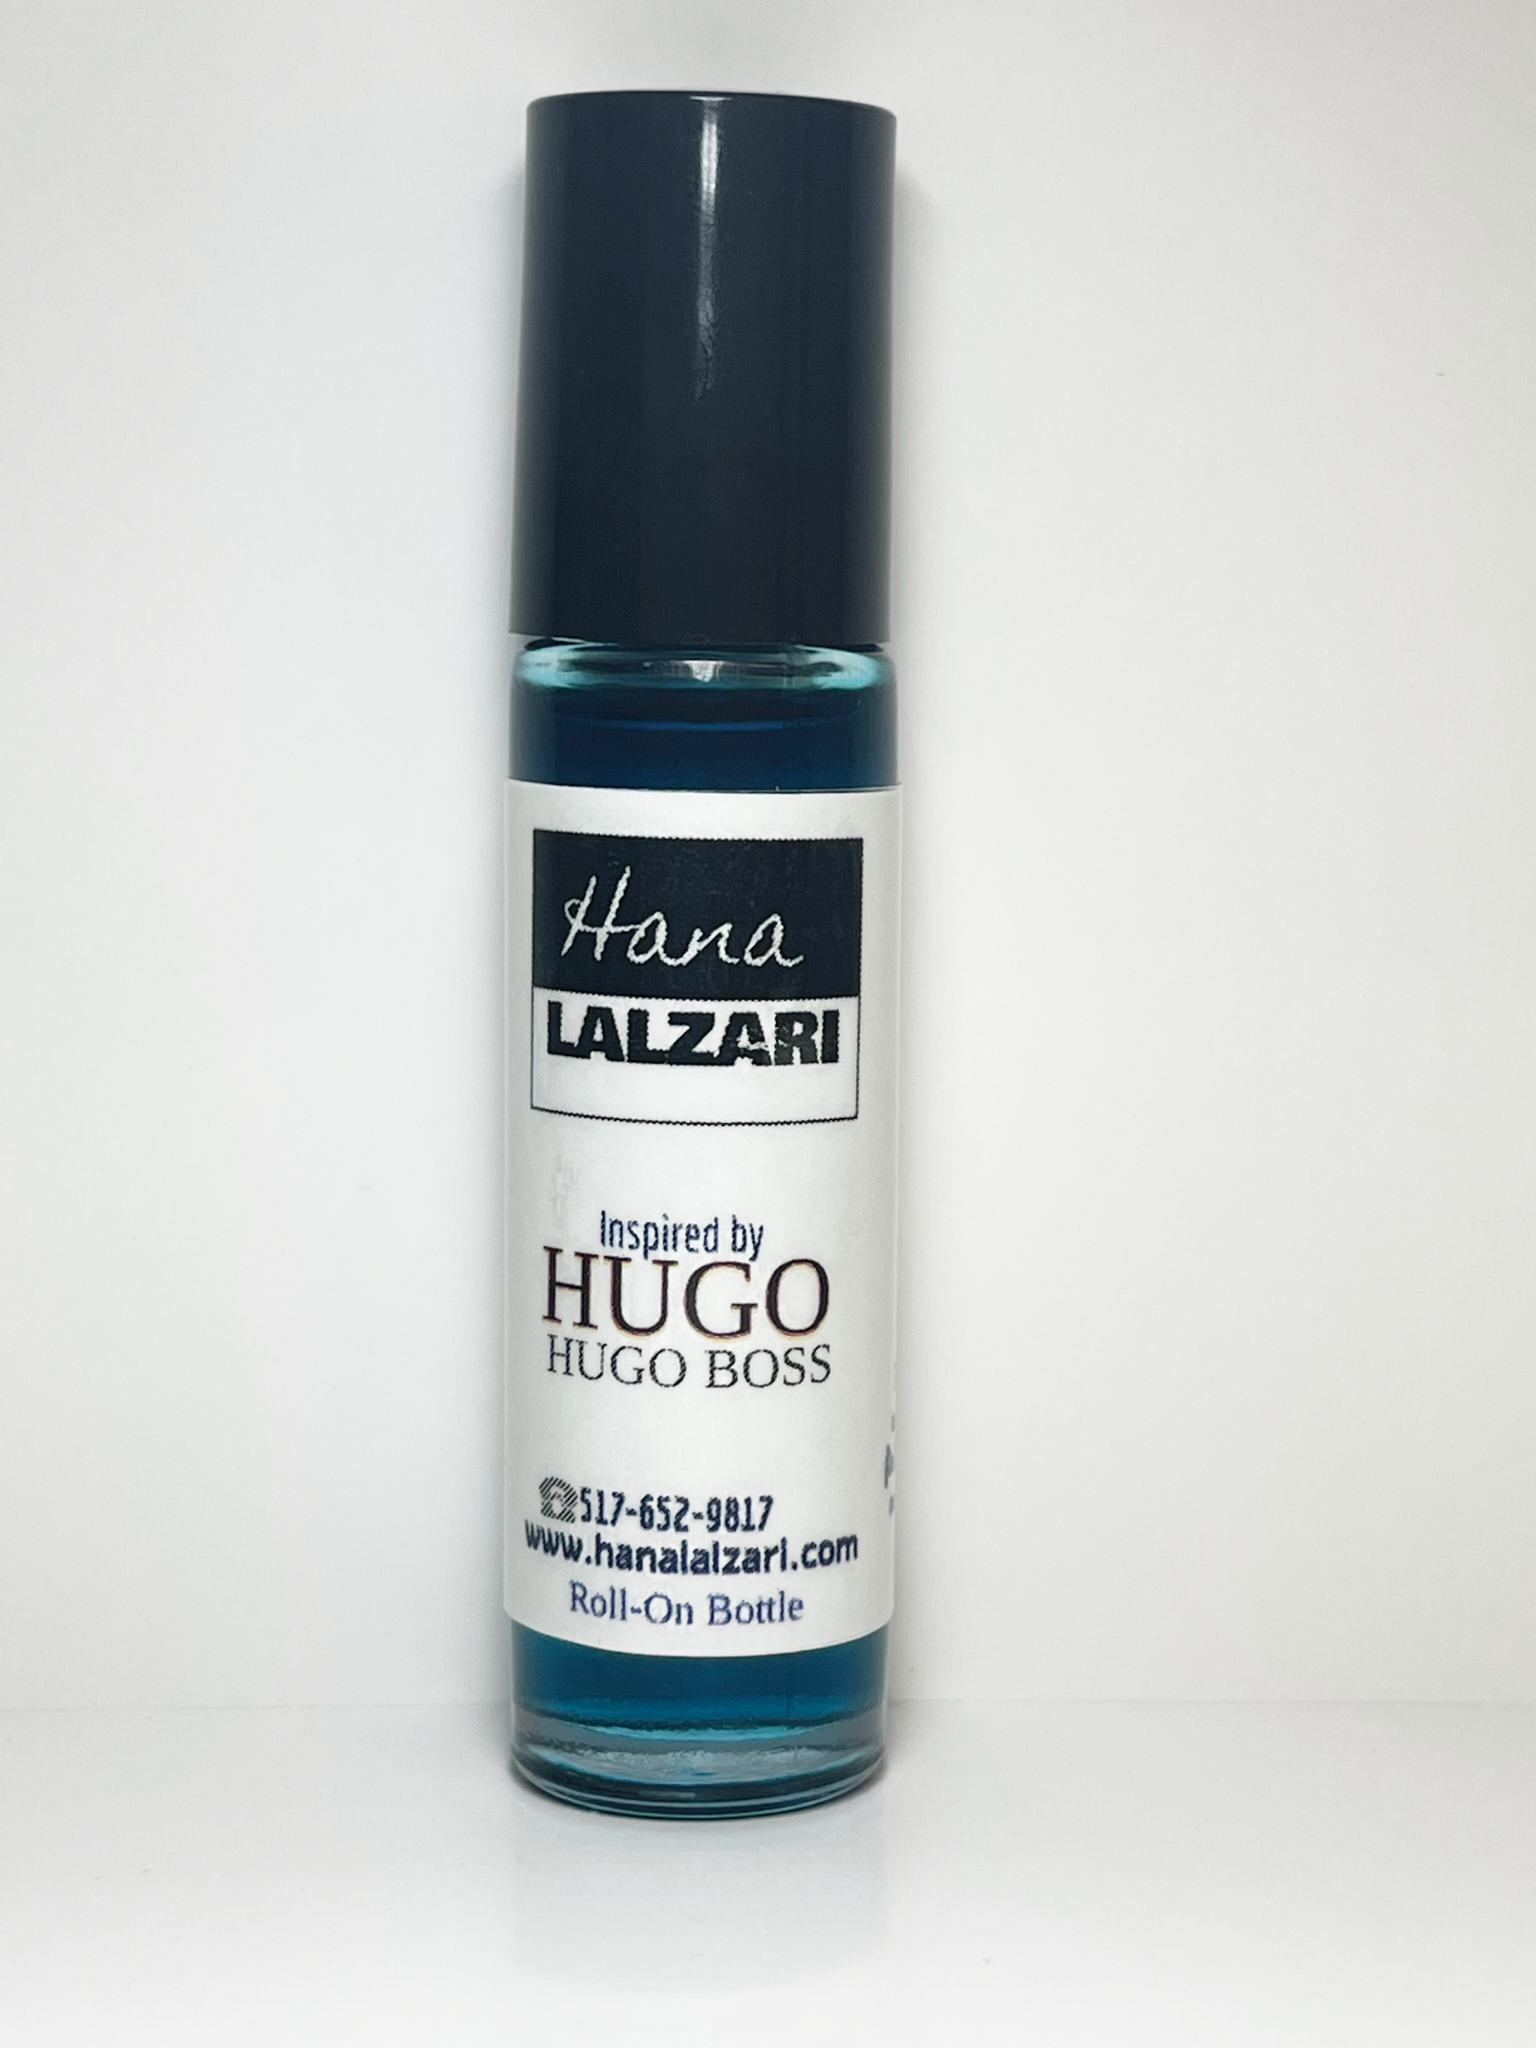 Luxuriously Inspired by Hugo Hugo Boss